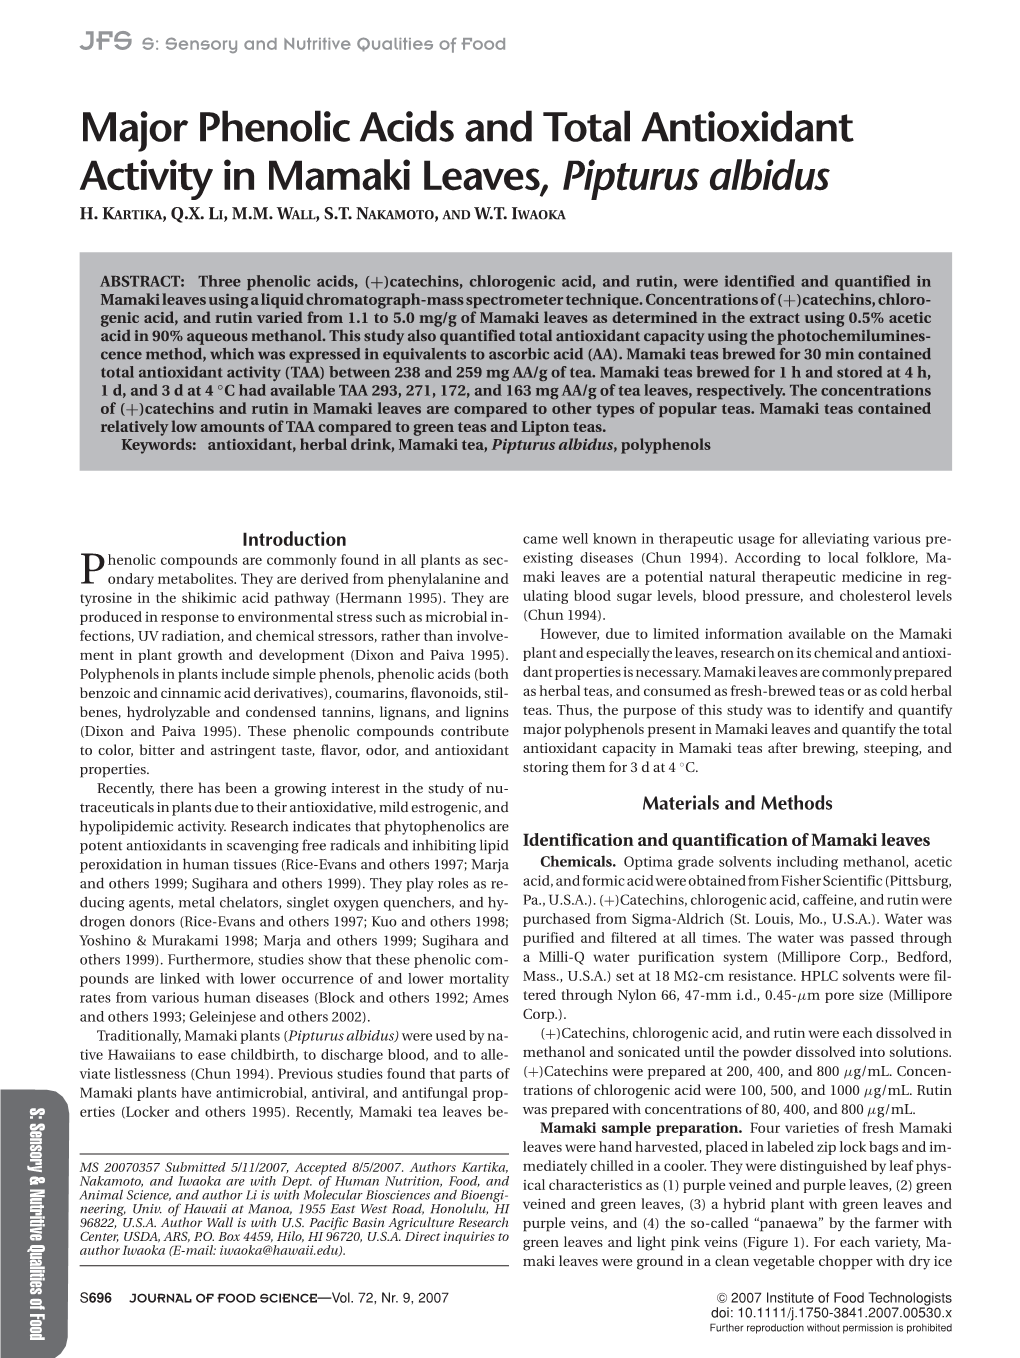 Major Phenolic Acids and Total Antioxidant Activity in Mamaki